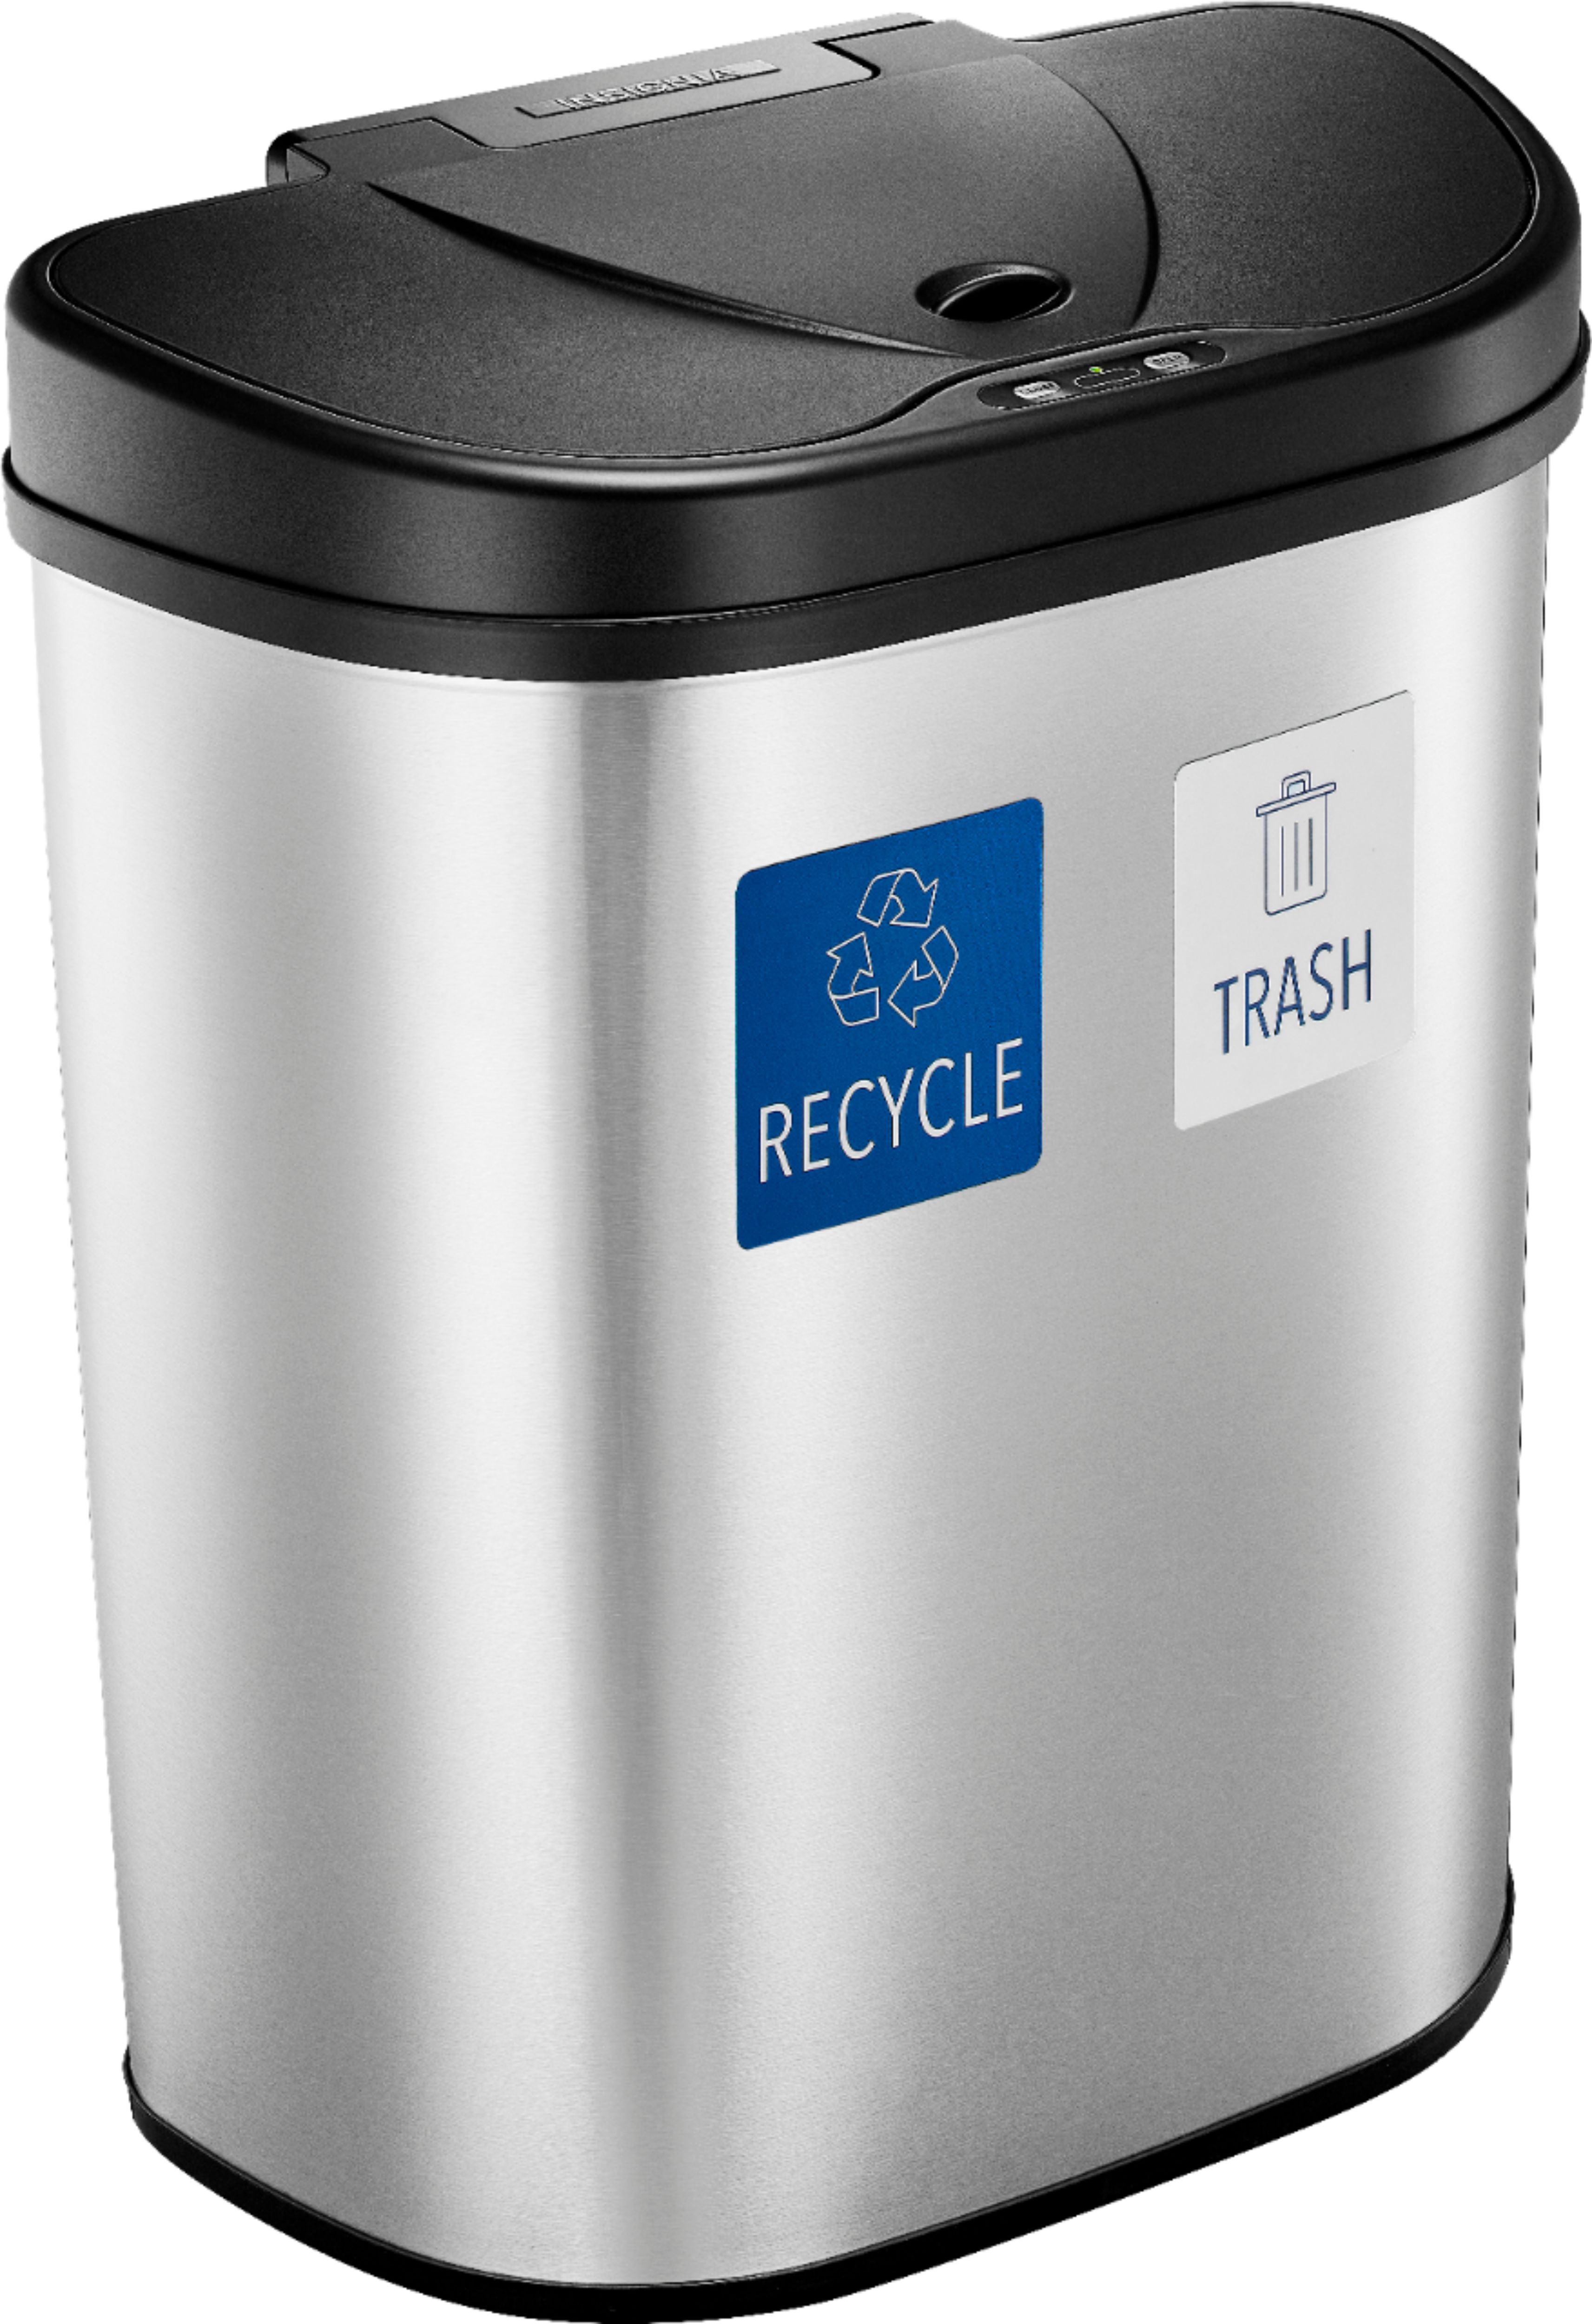 Dual Compartment Motion Sensor Trash Can 18 Gallon, Recycling